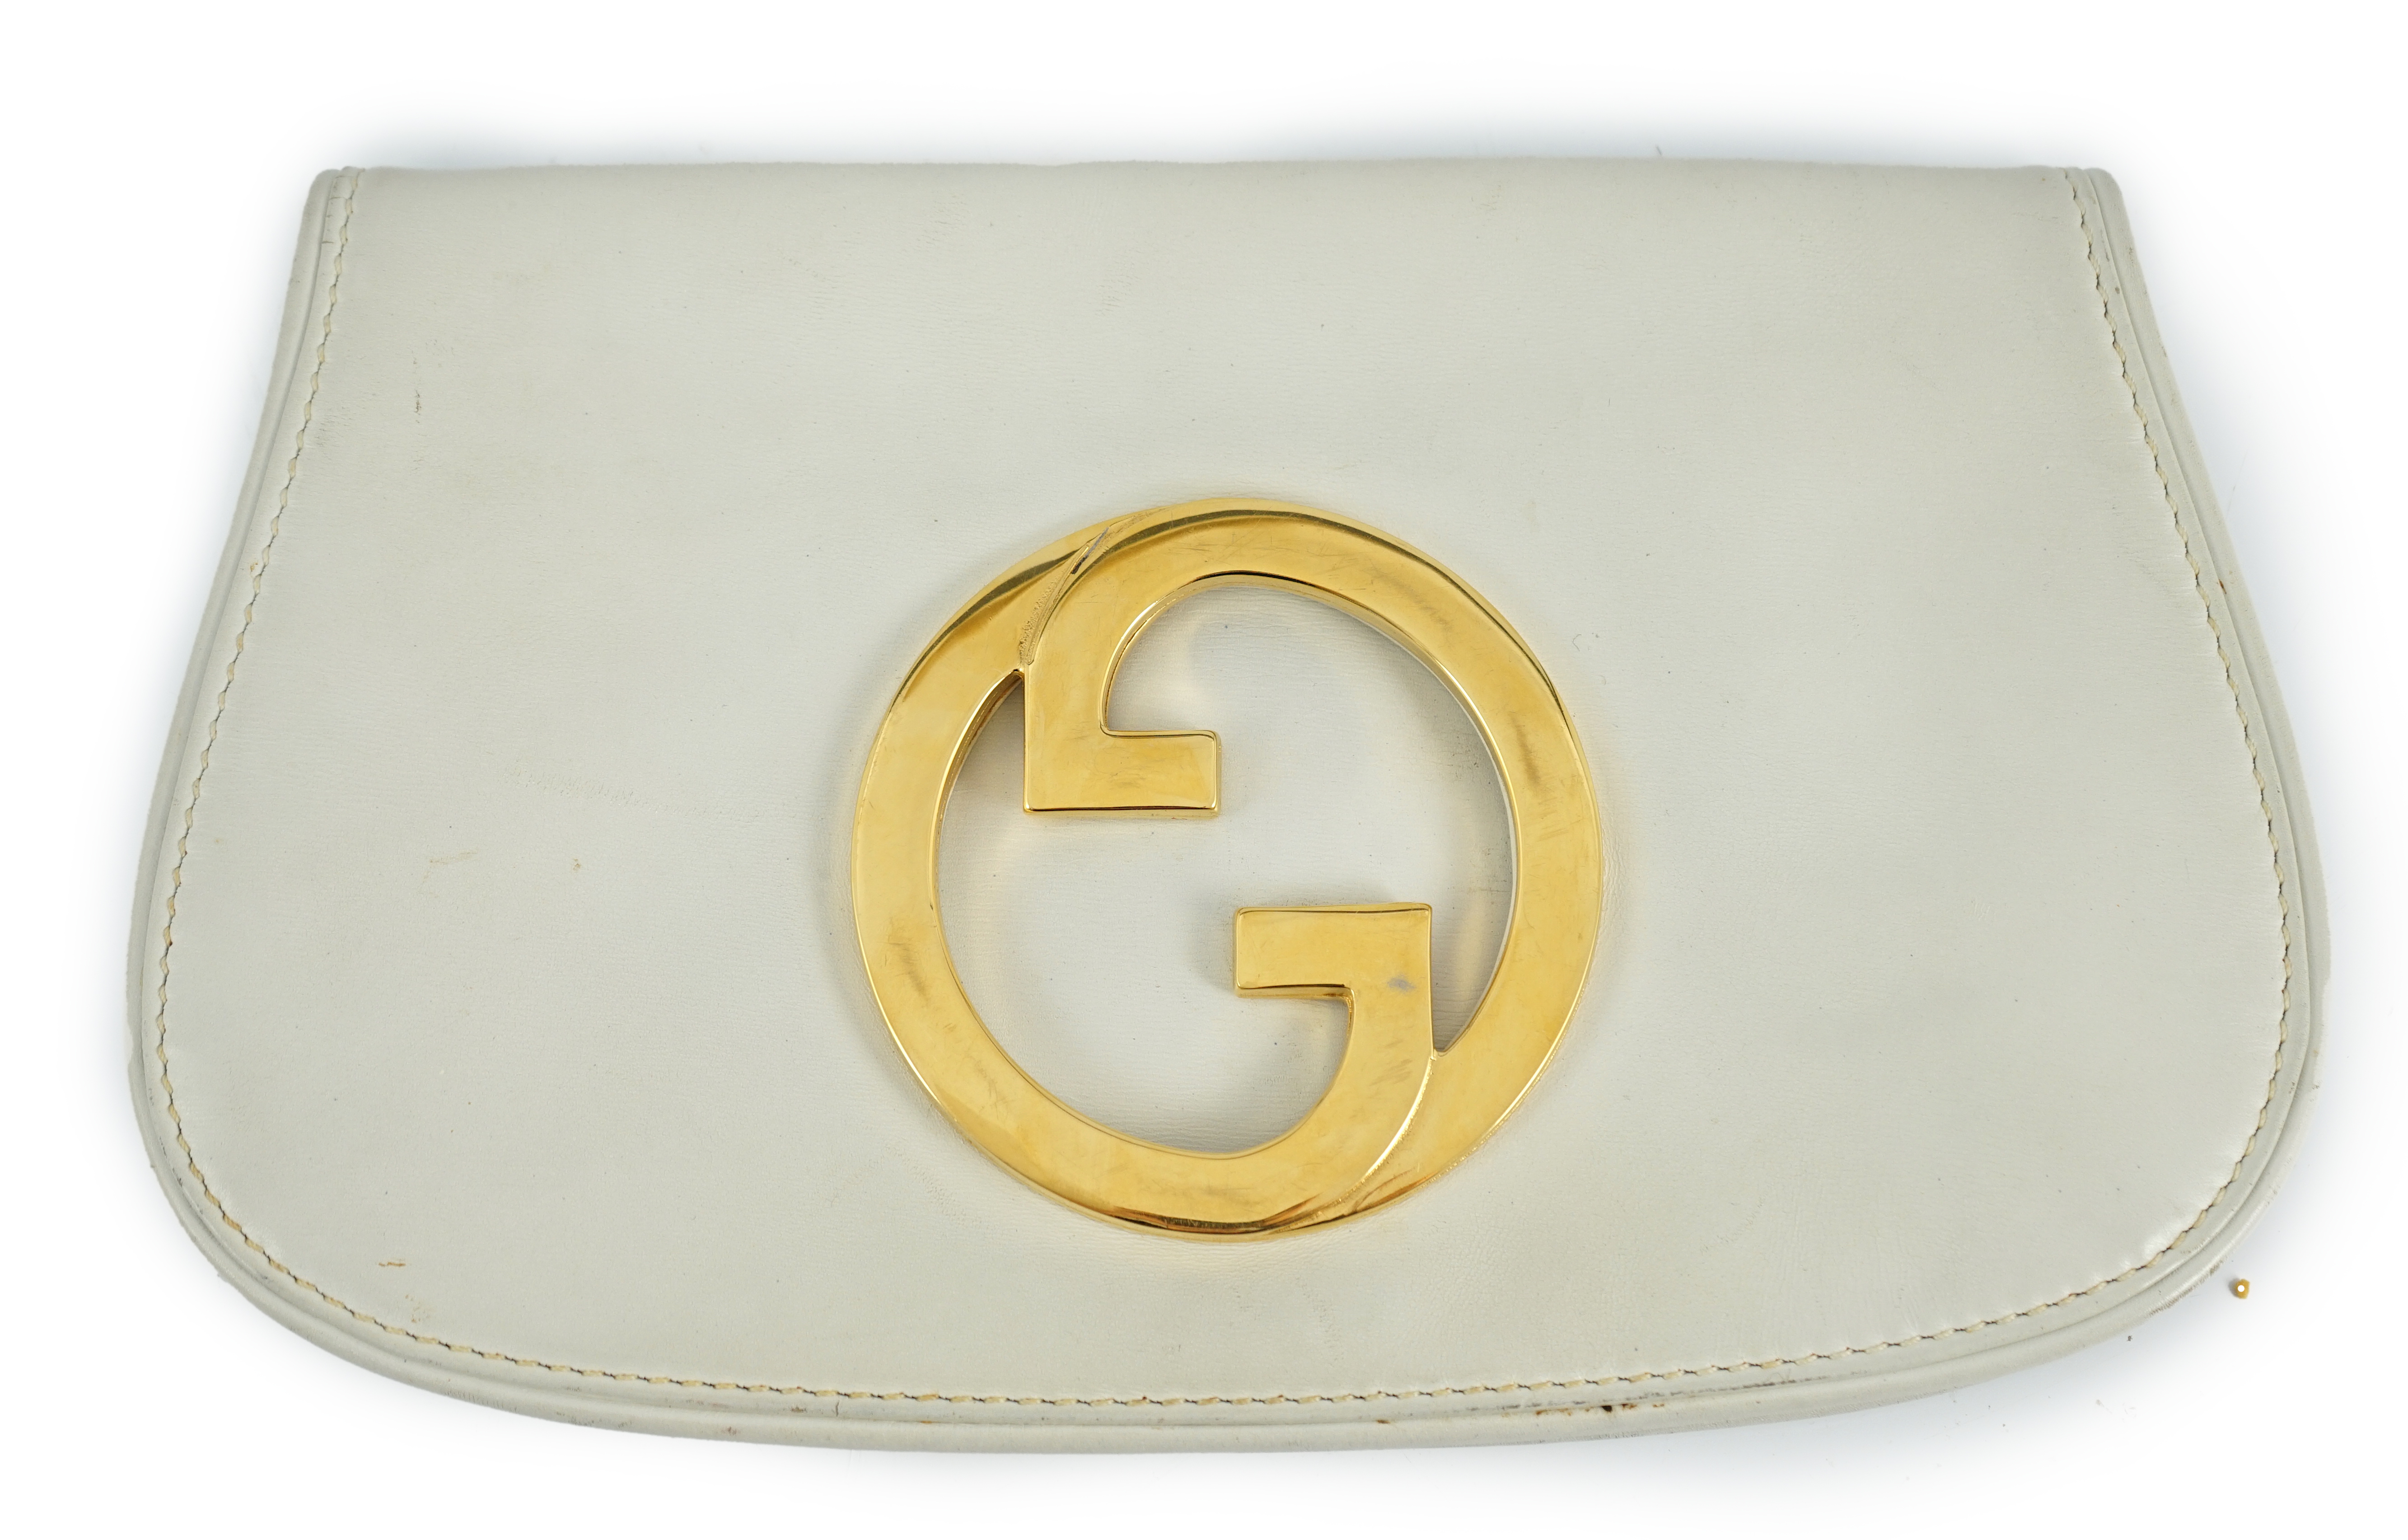 A vintage Gucci Blondie Unicorn white leather clutch bag, width 28cm, depth 4cm, height 16cm